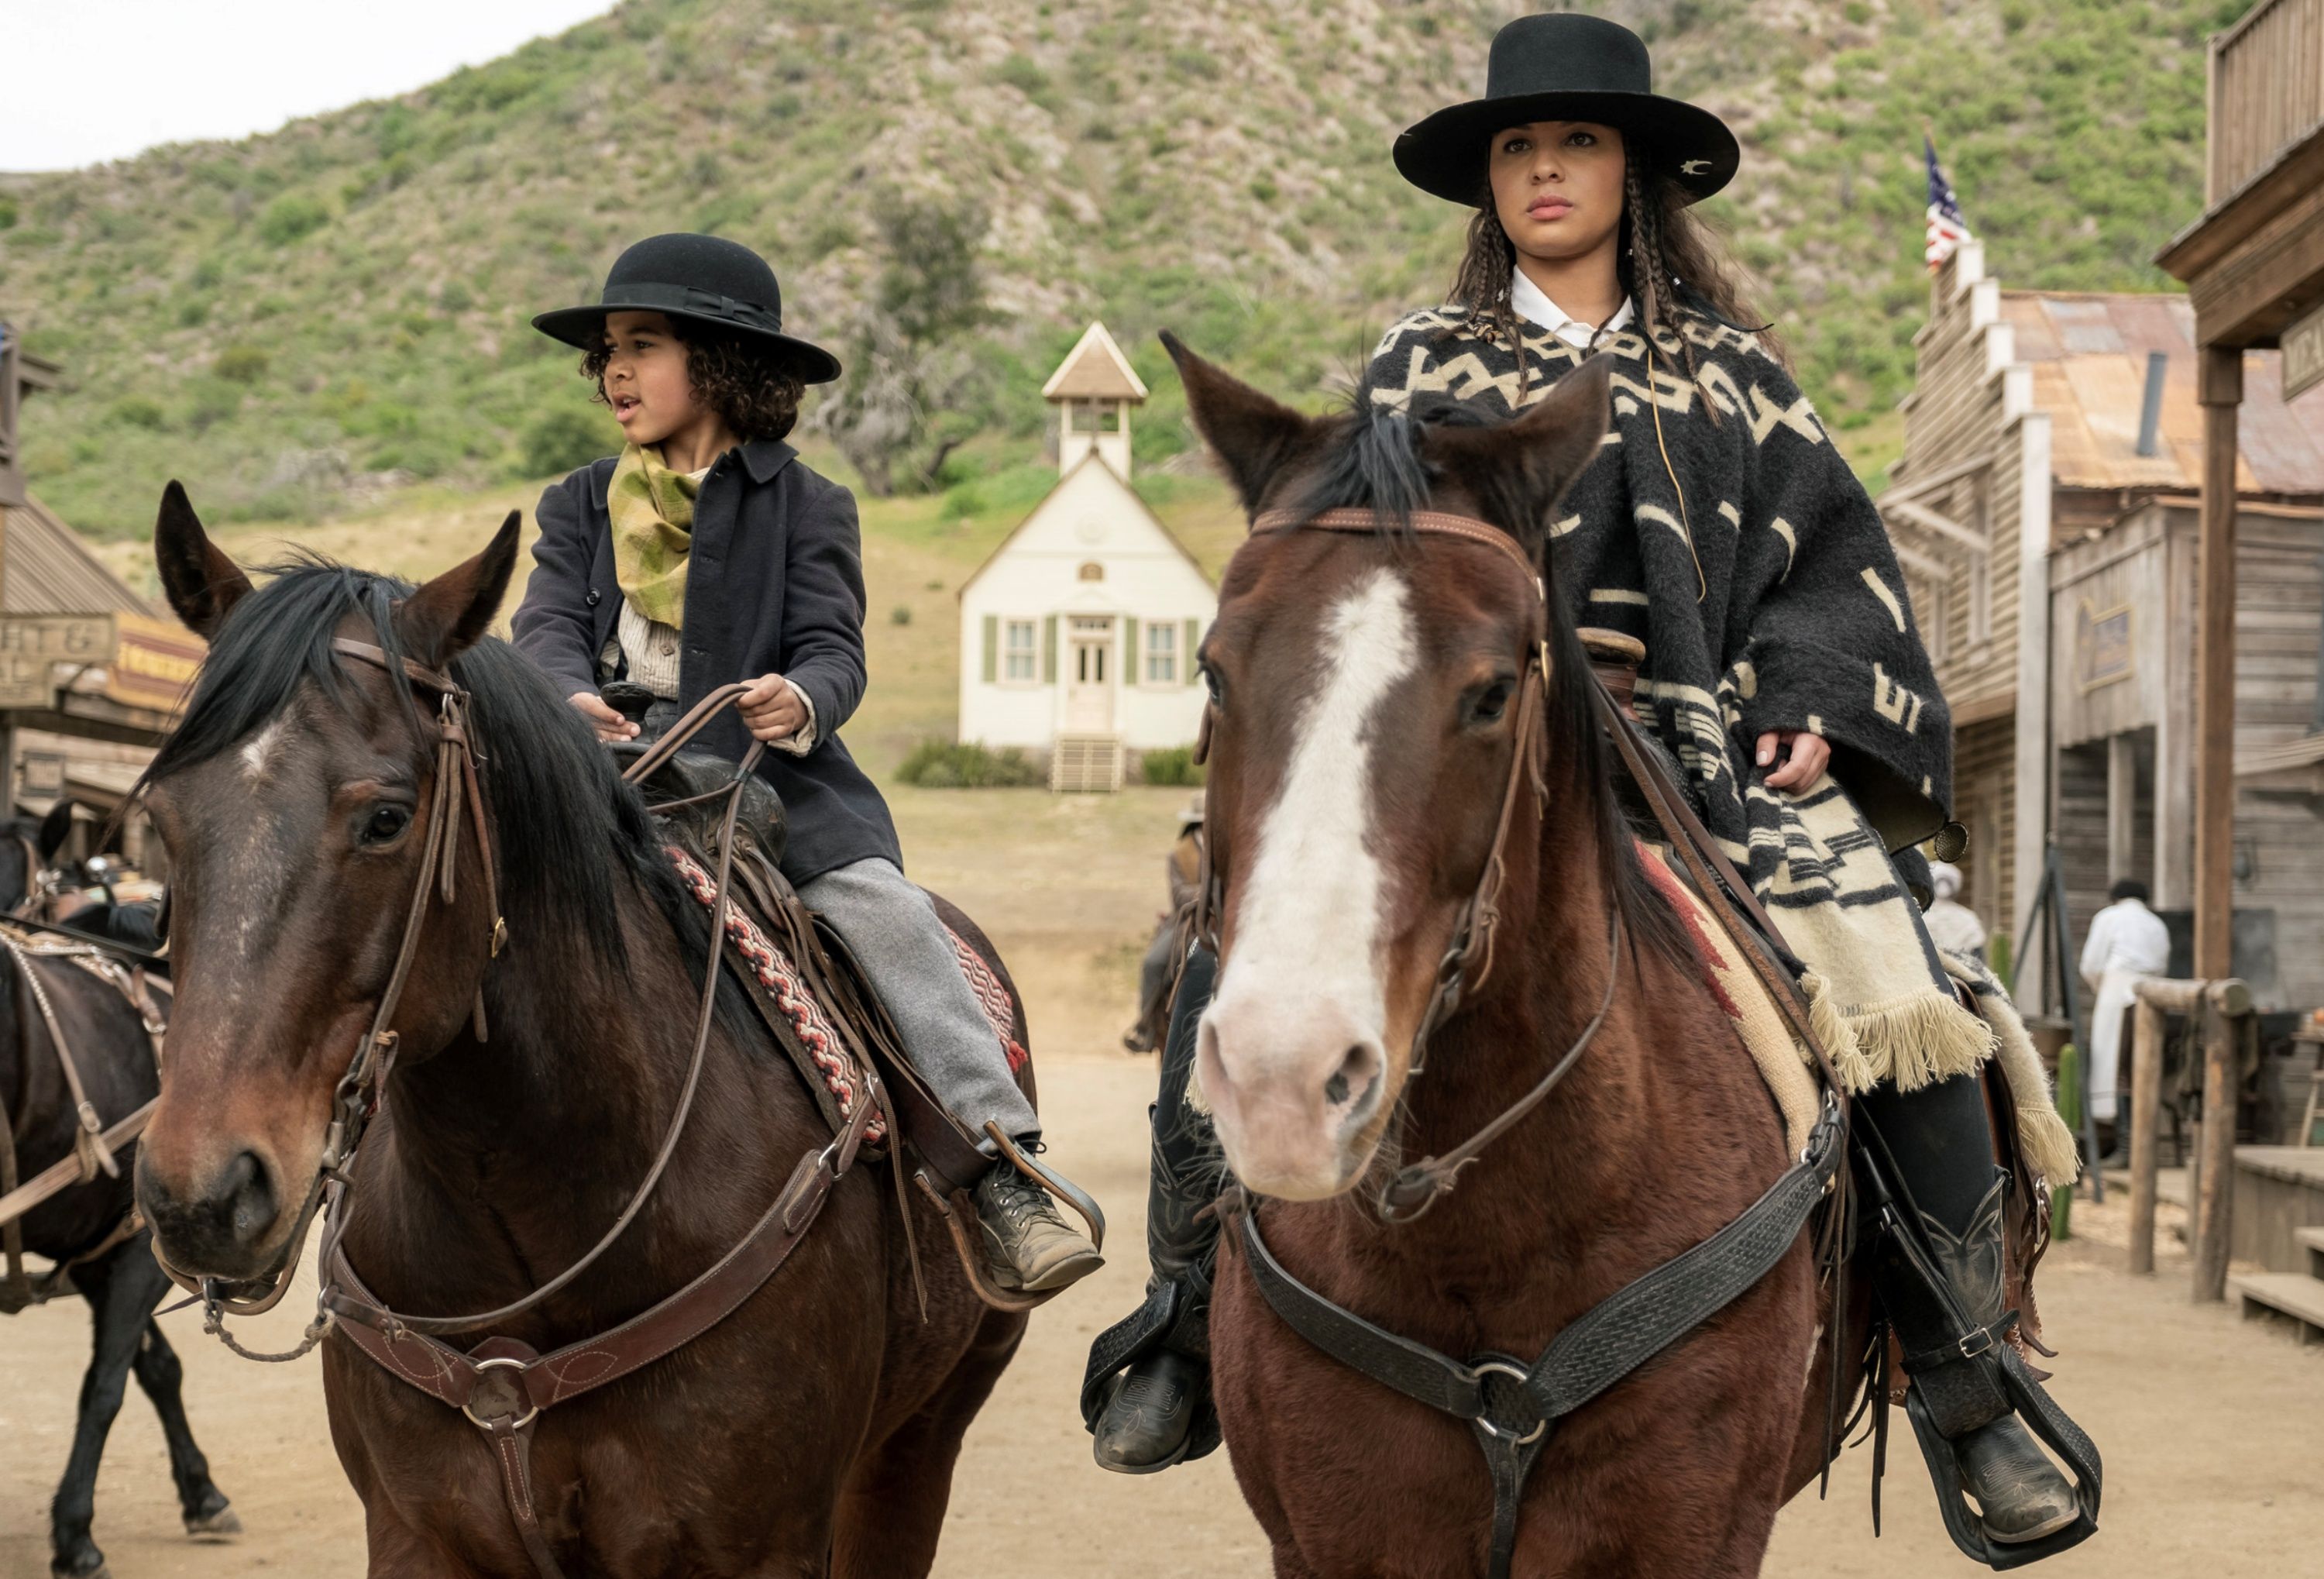 Jasmine Cephas Jones as Ashley Jones and Atticus Woodward as Sean Jones in the Western episode of Season 2 of Blindspotting